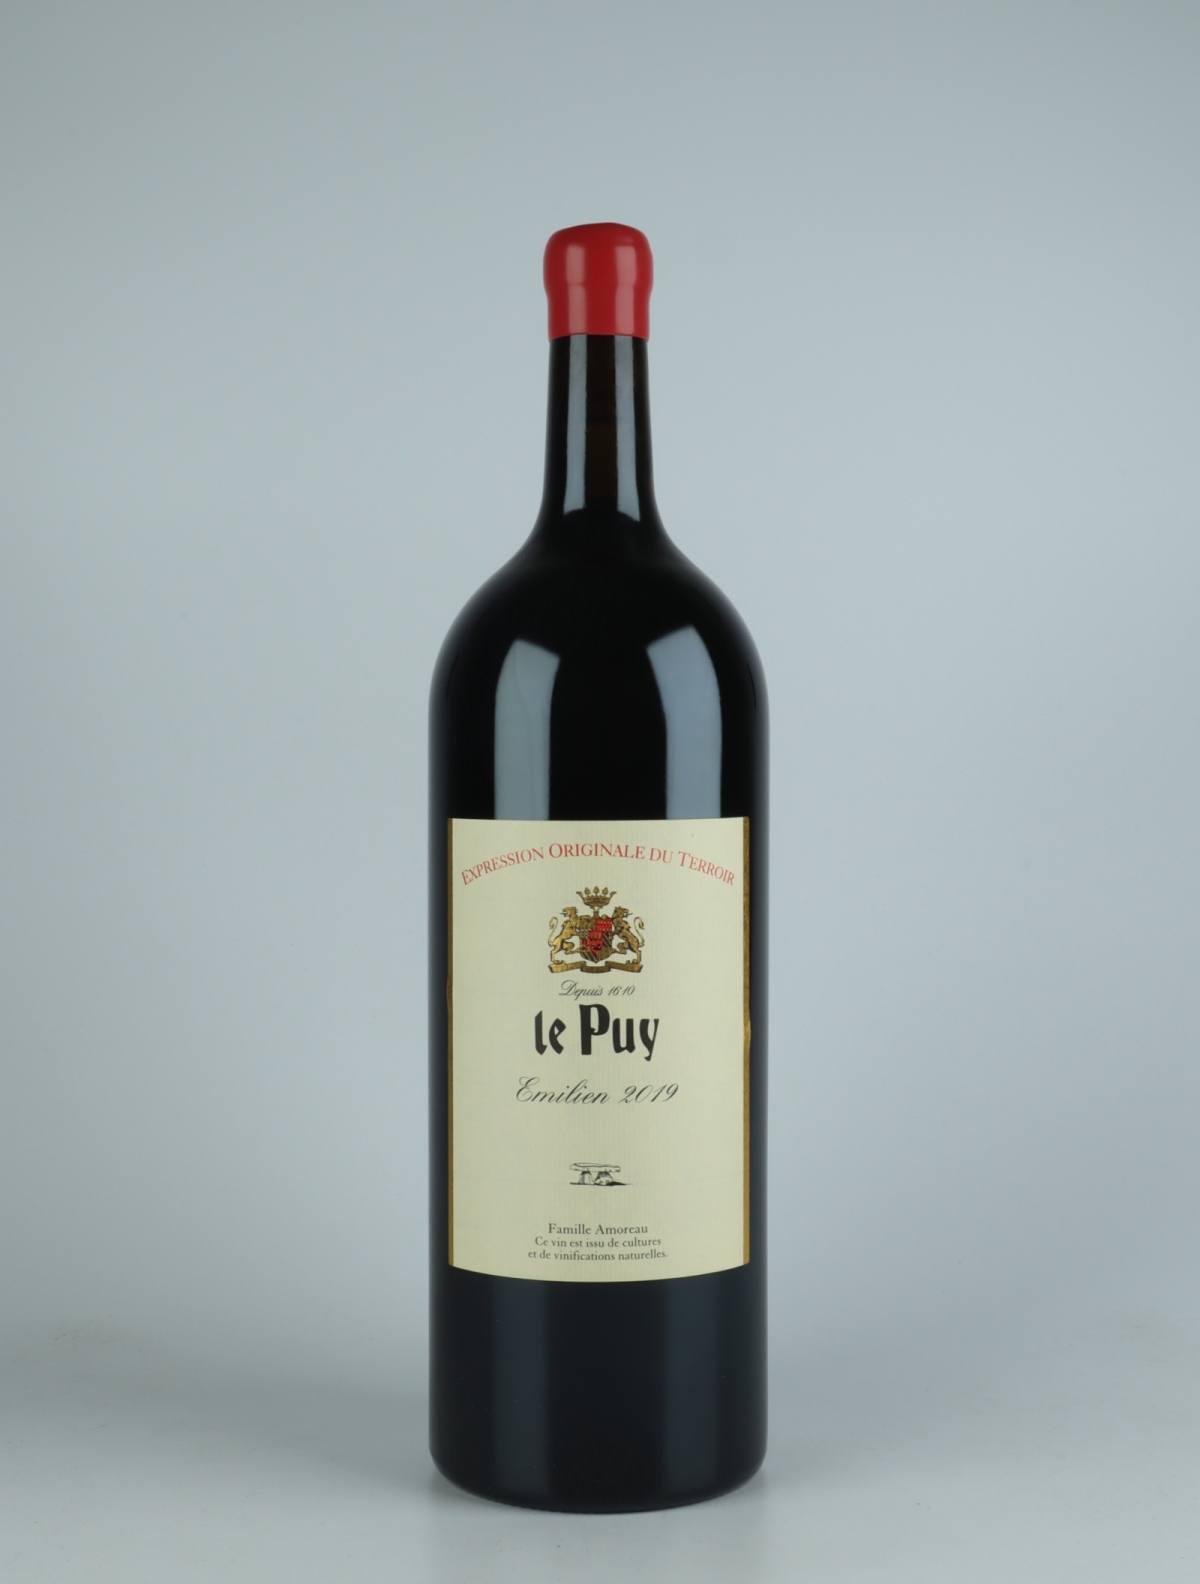 A bottle 2019 Emilien Red wine from Château le Puy, Bordeaux in France